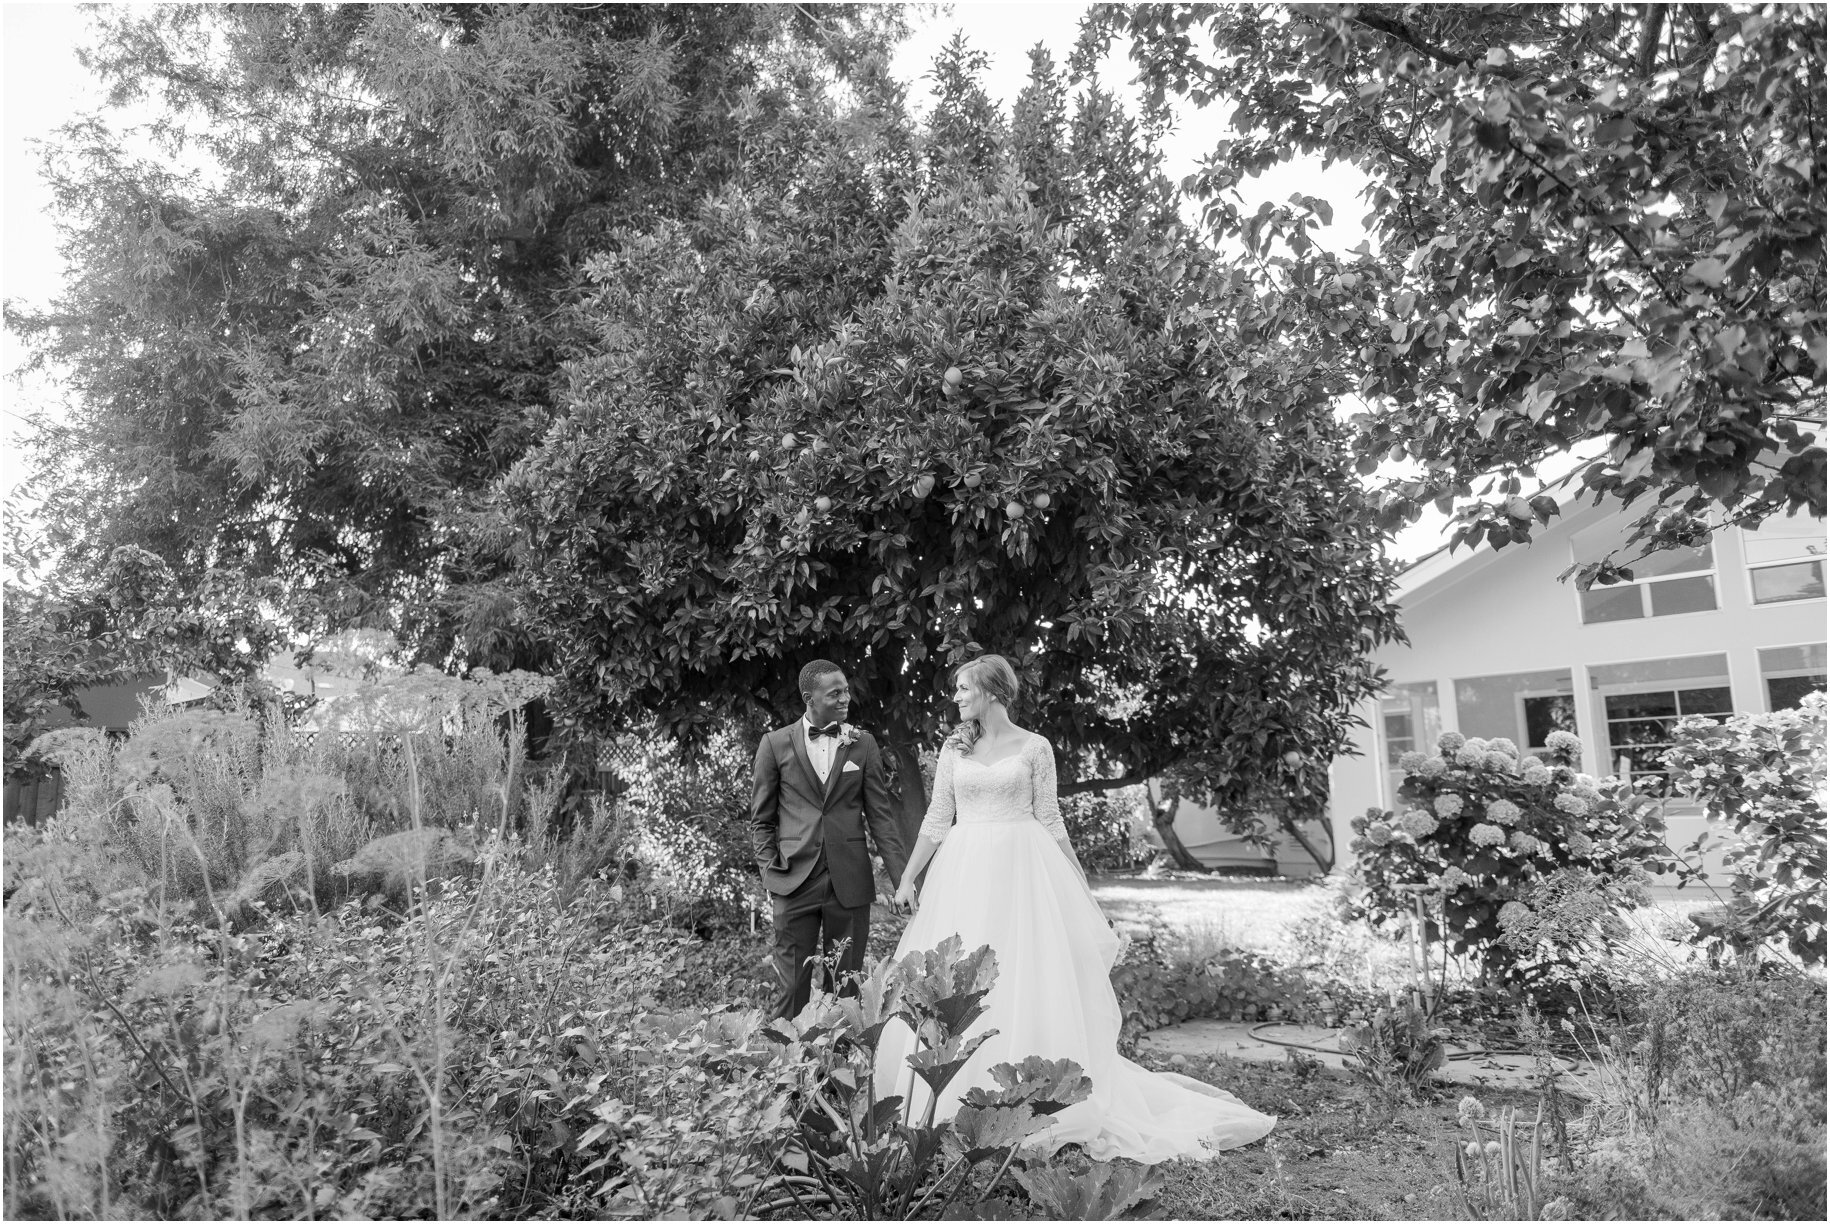 1985lukephotography.com | 1985 Luke Photography Bay Area San Francisco Northern California Wedding Photographers | Willow Glen United Methodist Church | San Jose Weddings 54.jpg